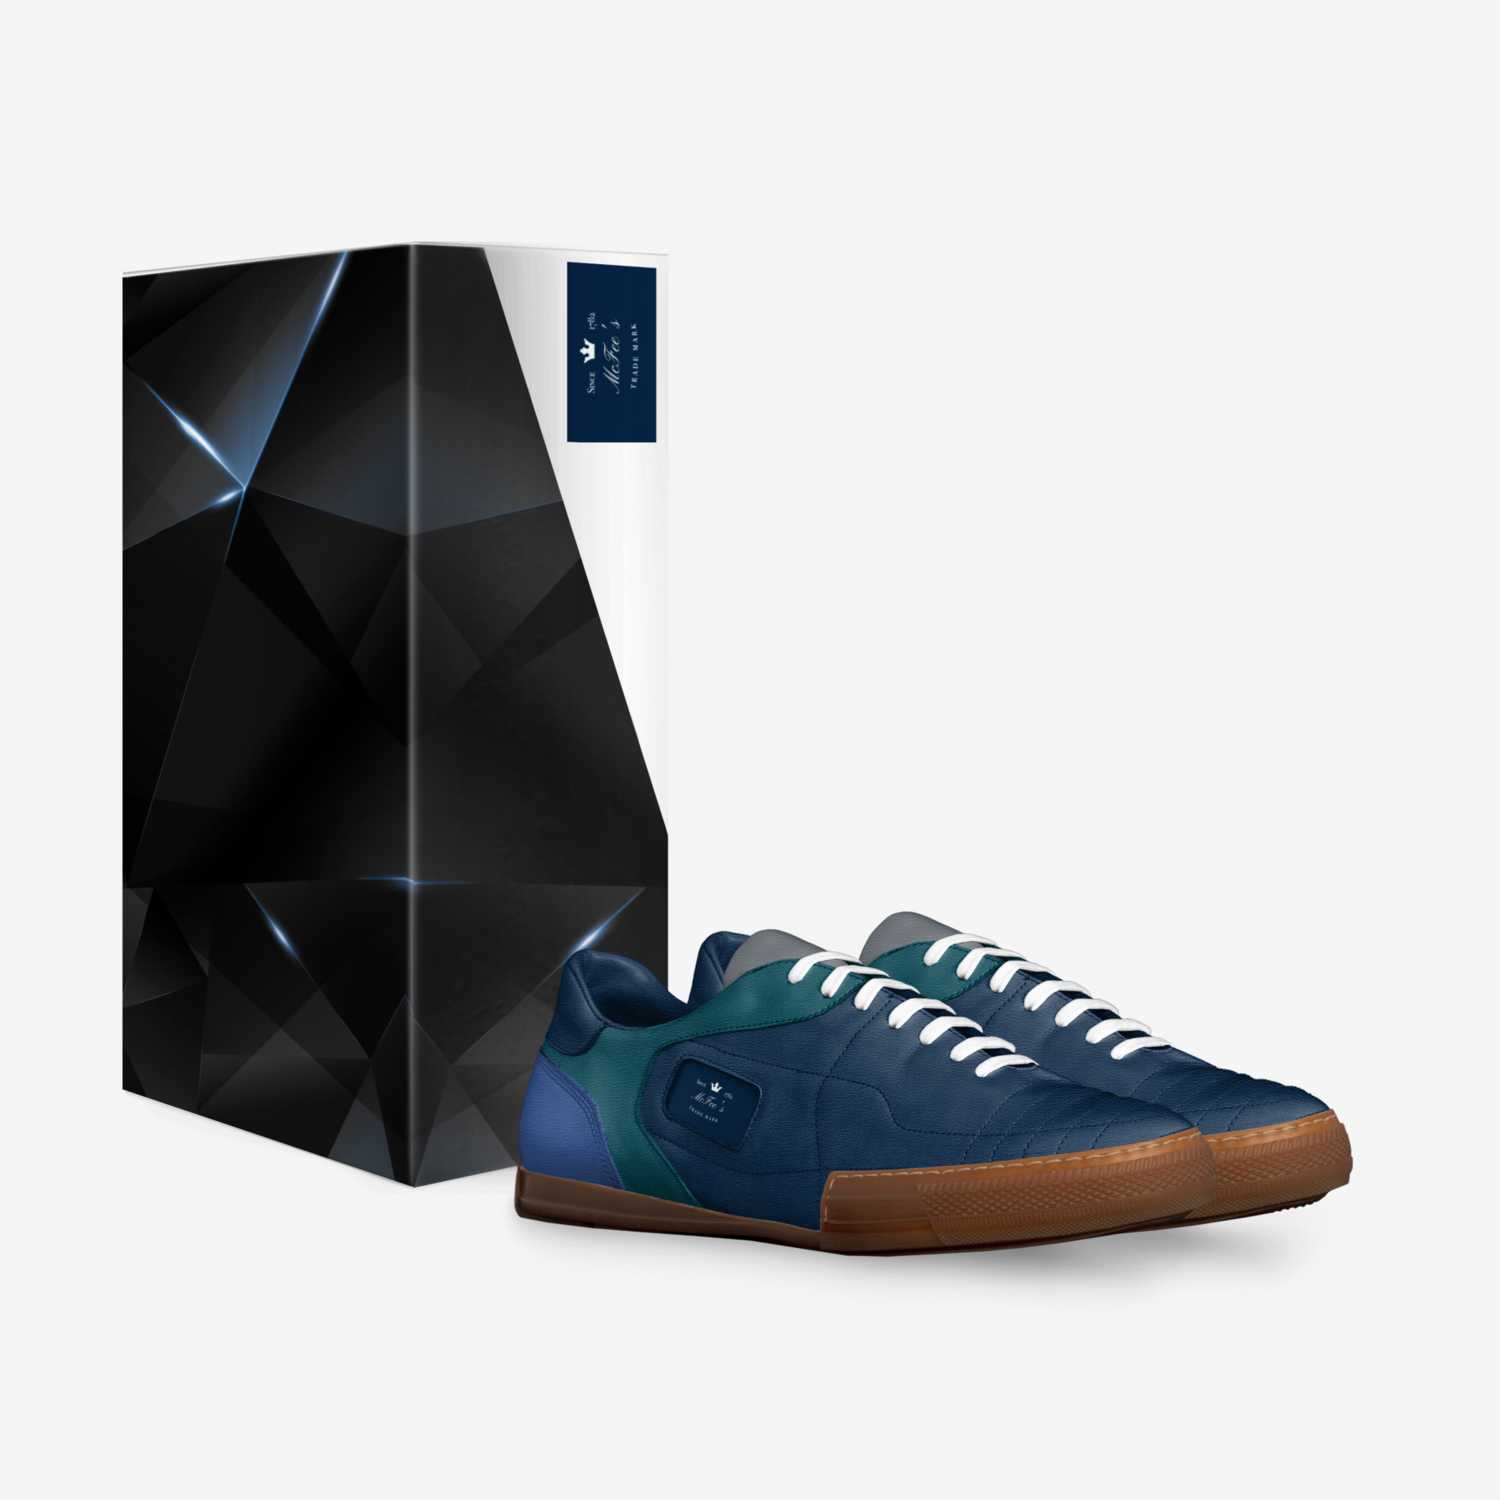 McFee's custom made in Italy shoes by Braylon Lee Mcfee | Box view